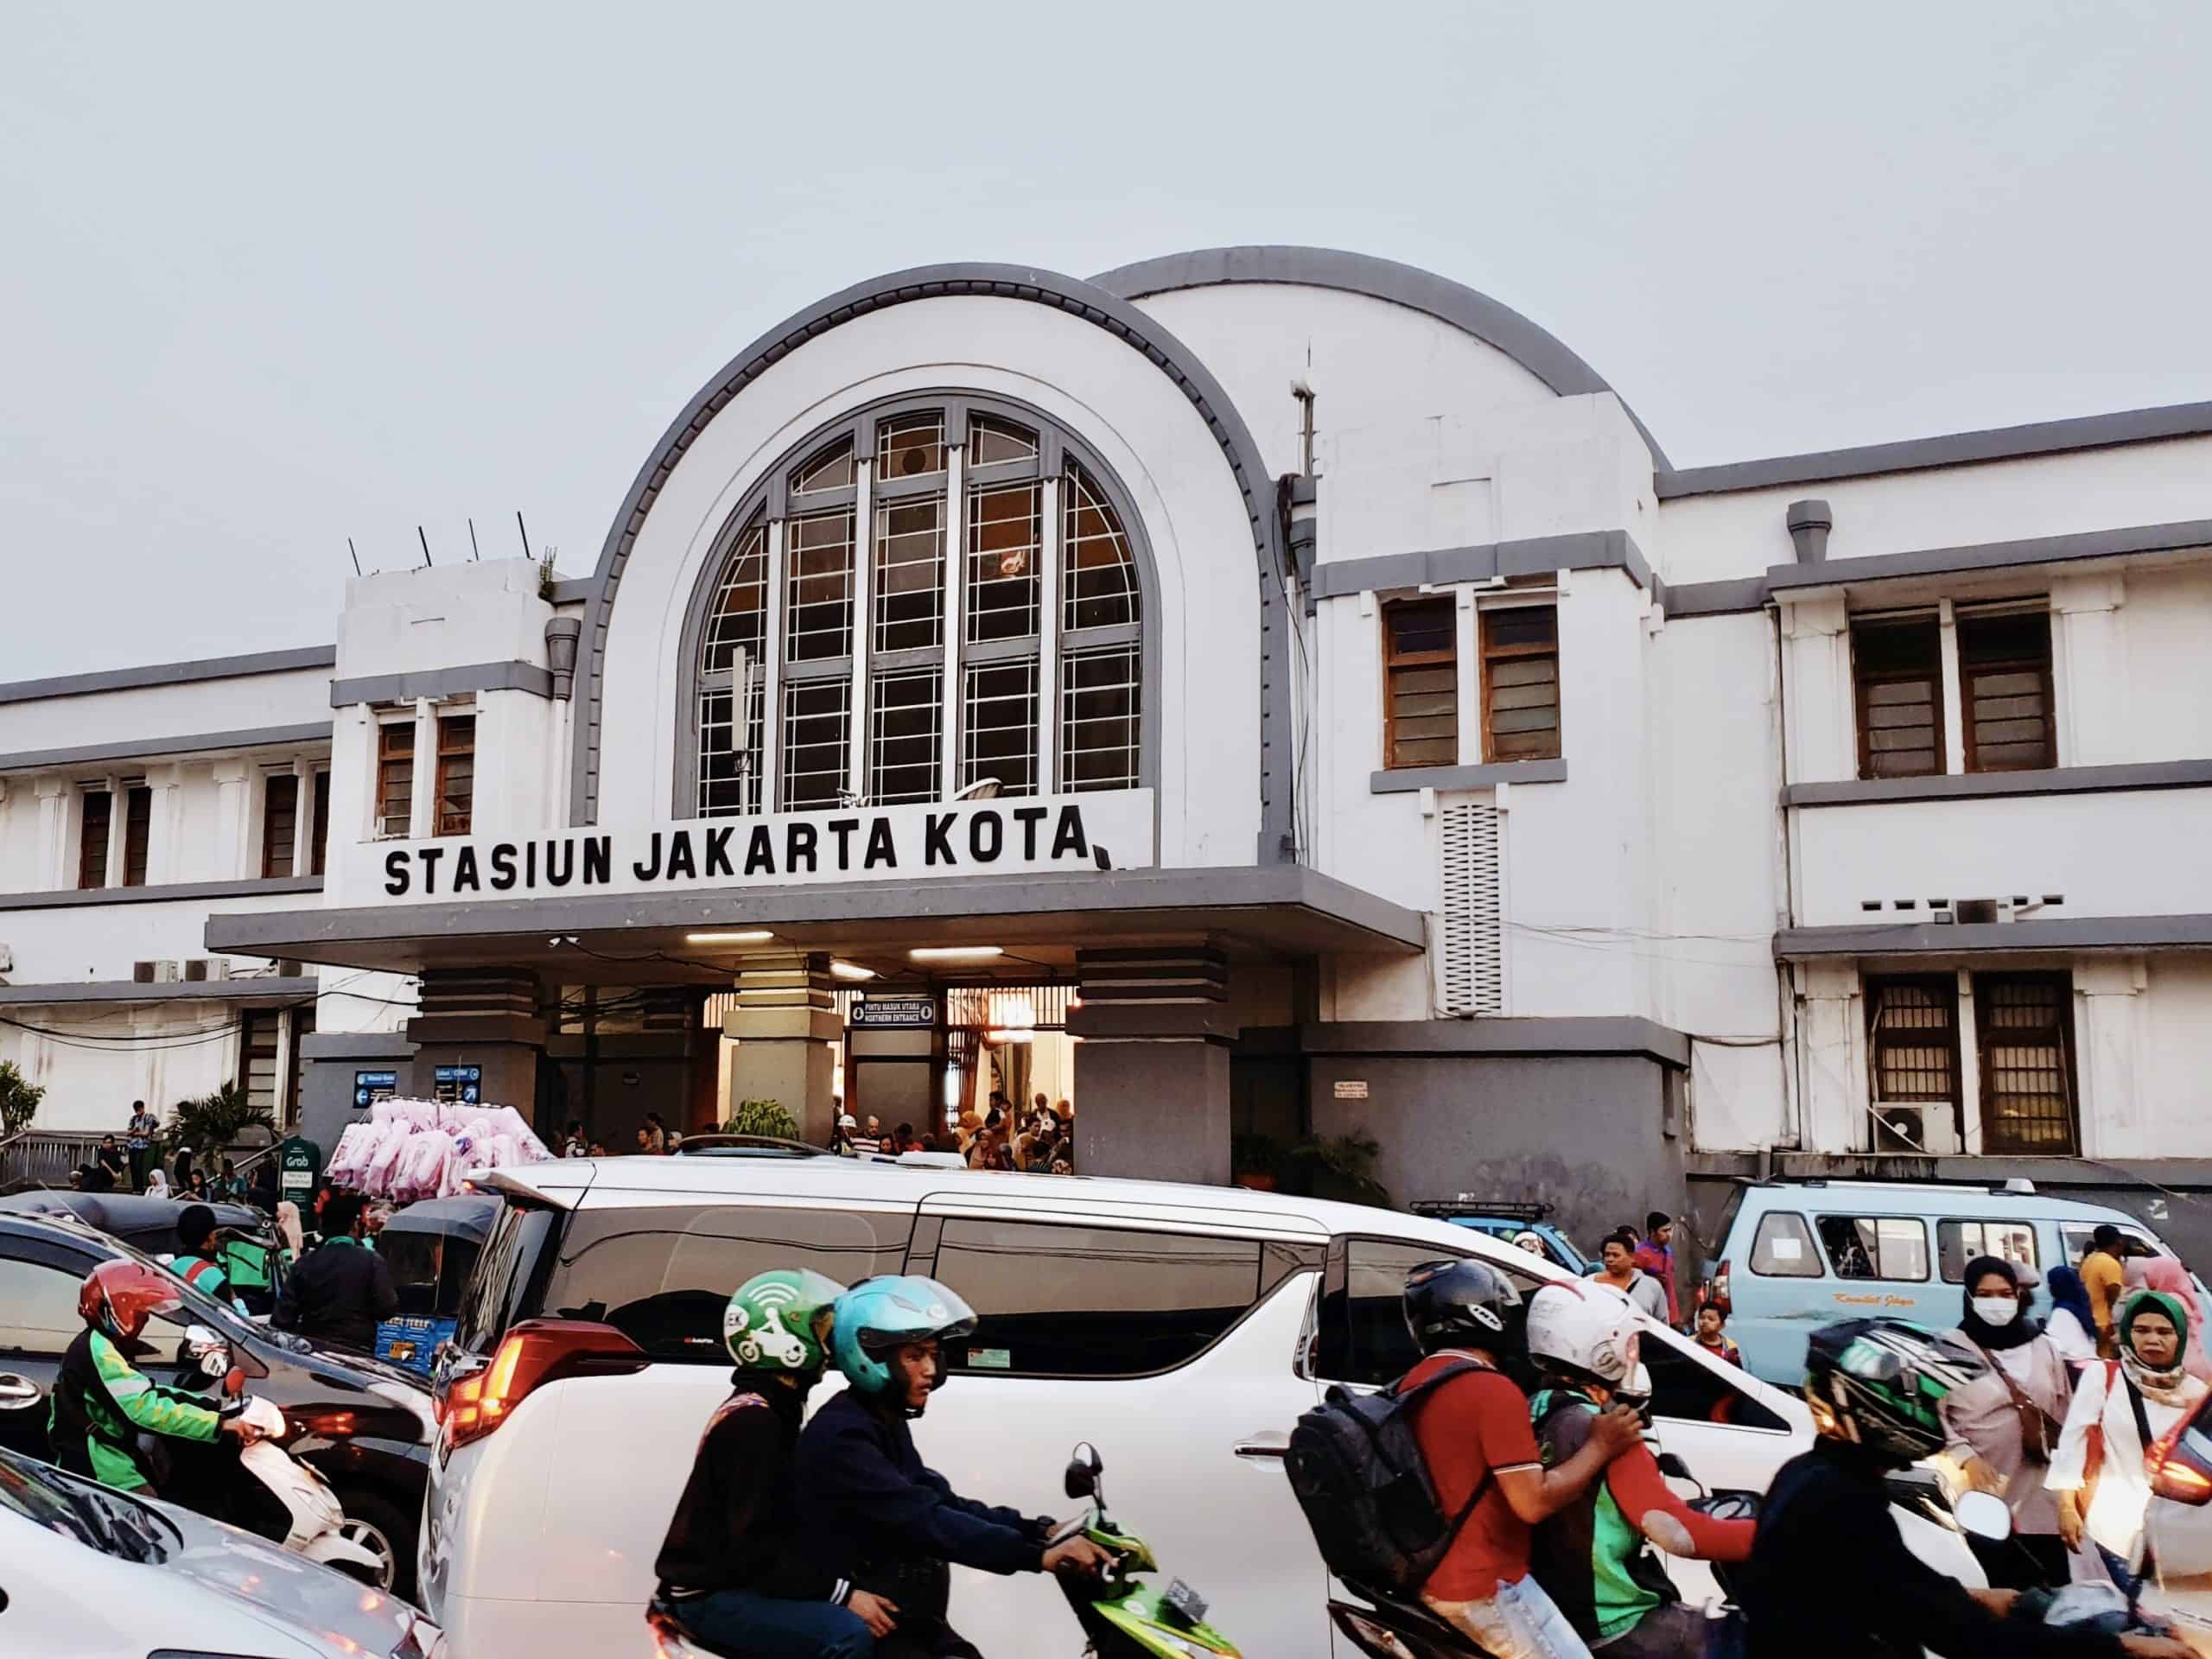 Crazy traffic in Jakarta's Kota Tua